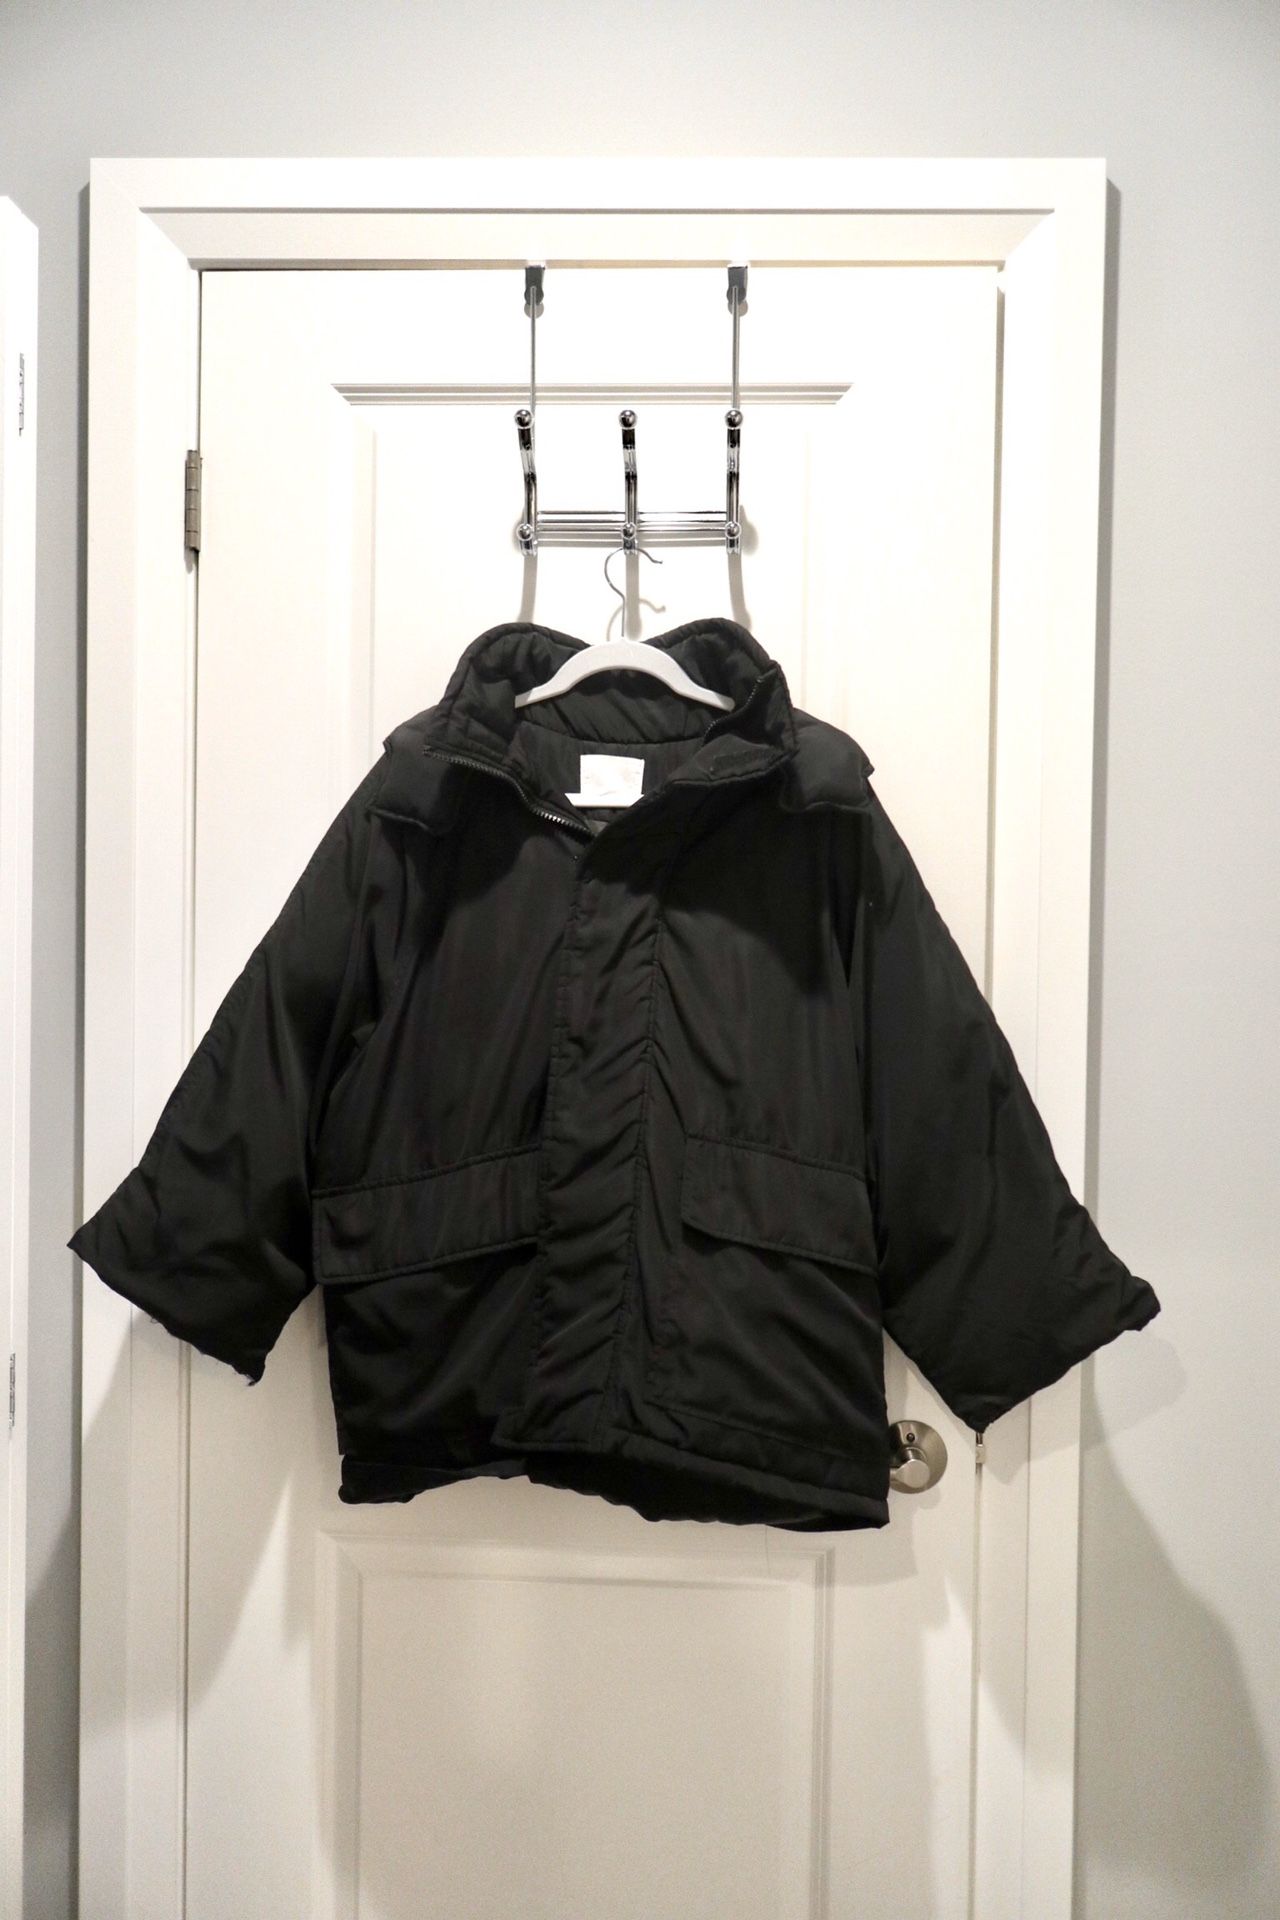 Black heavy winter coat very warm size M/L good condition men or women